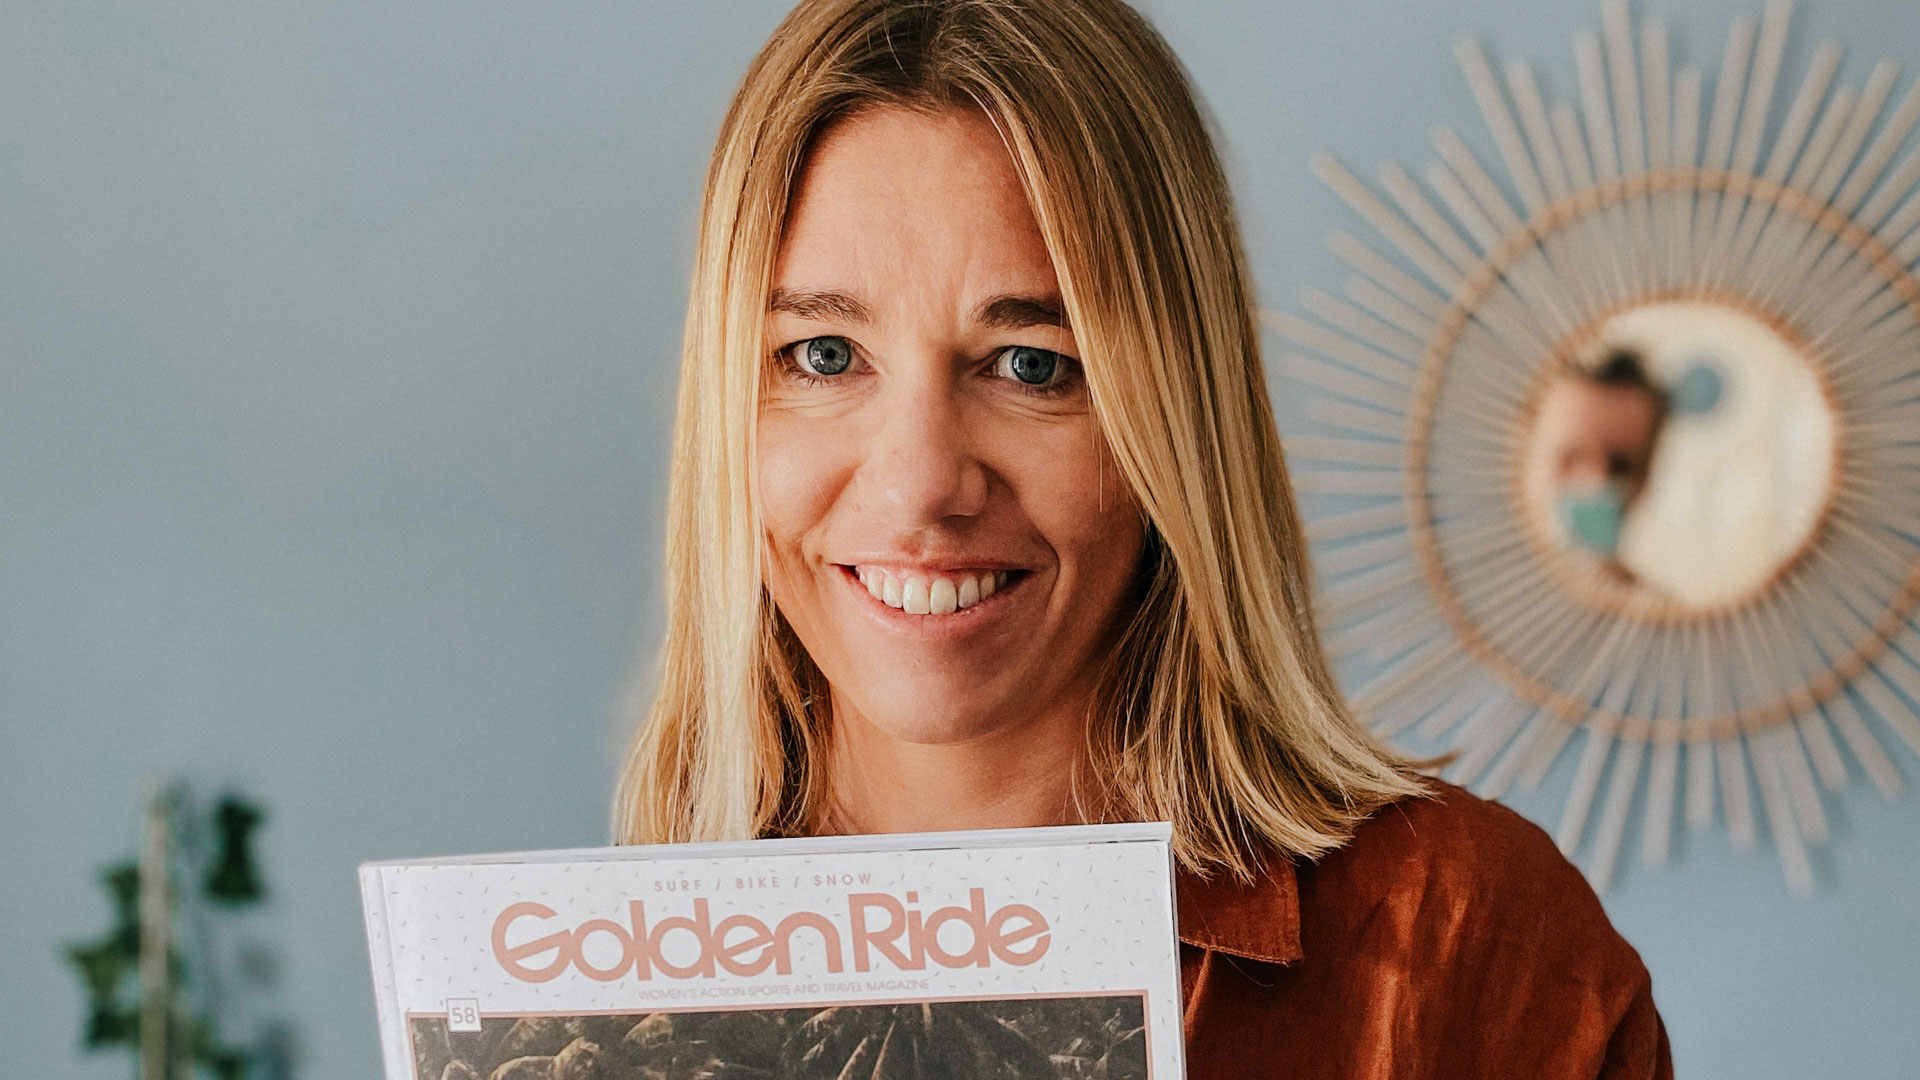 Bergpol Podcast Anita Fuchs Golden Ride Magazin Action Sport